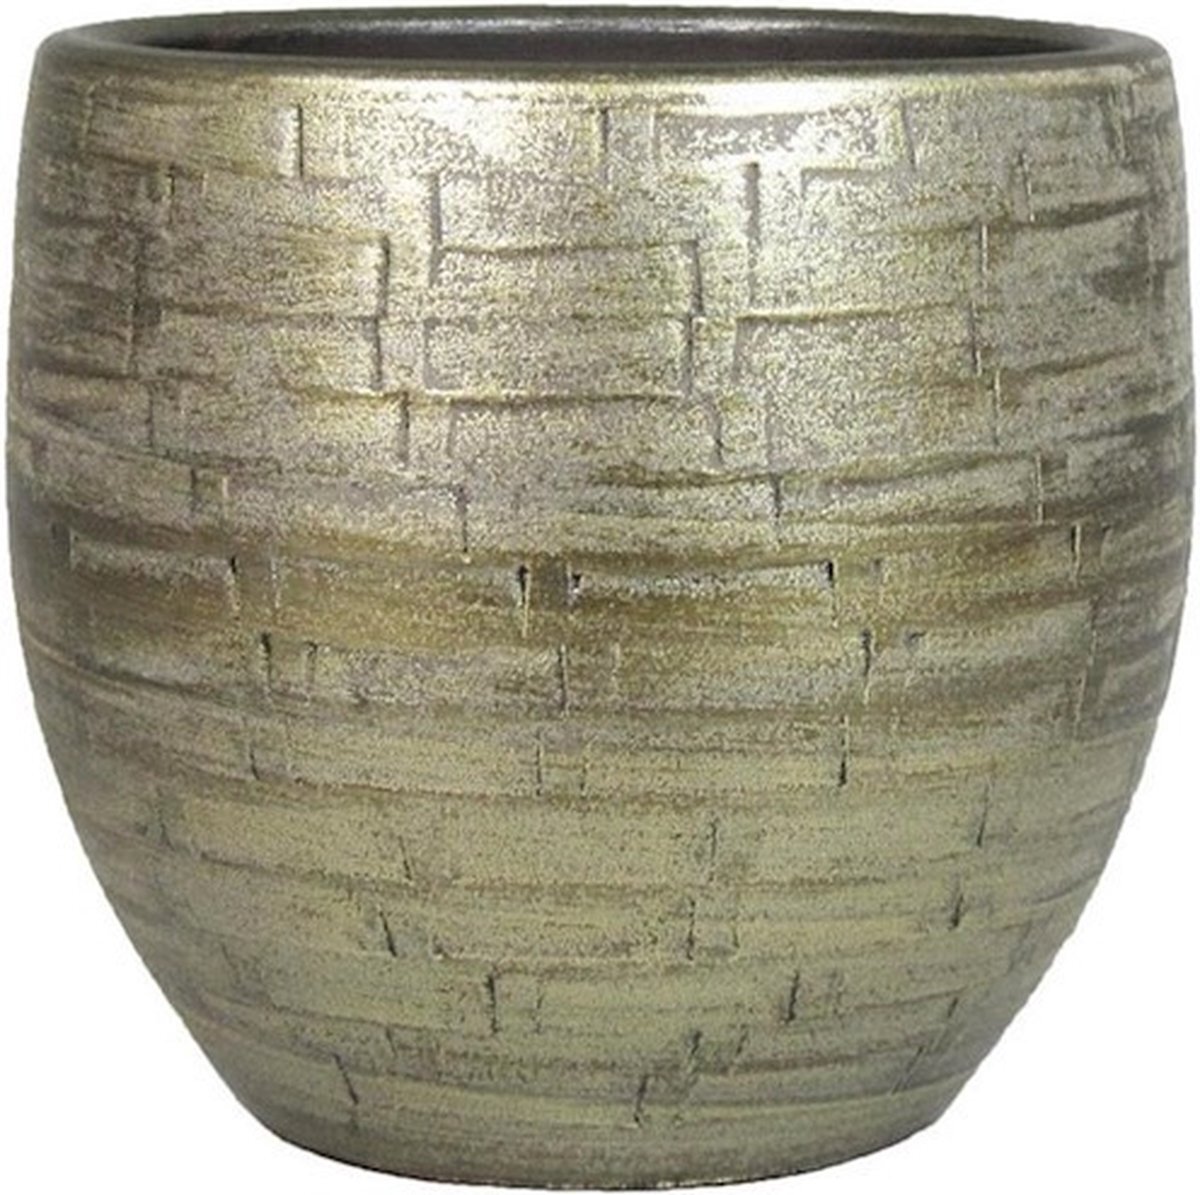 Bela Arte Plantenpot/bloempot - keramiek - goud glans - D18/H16 cm